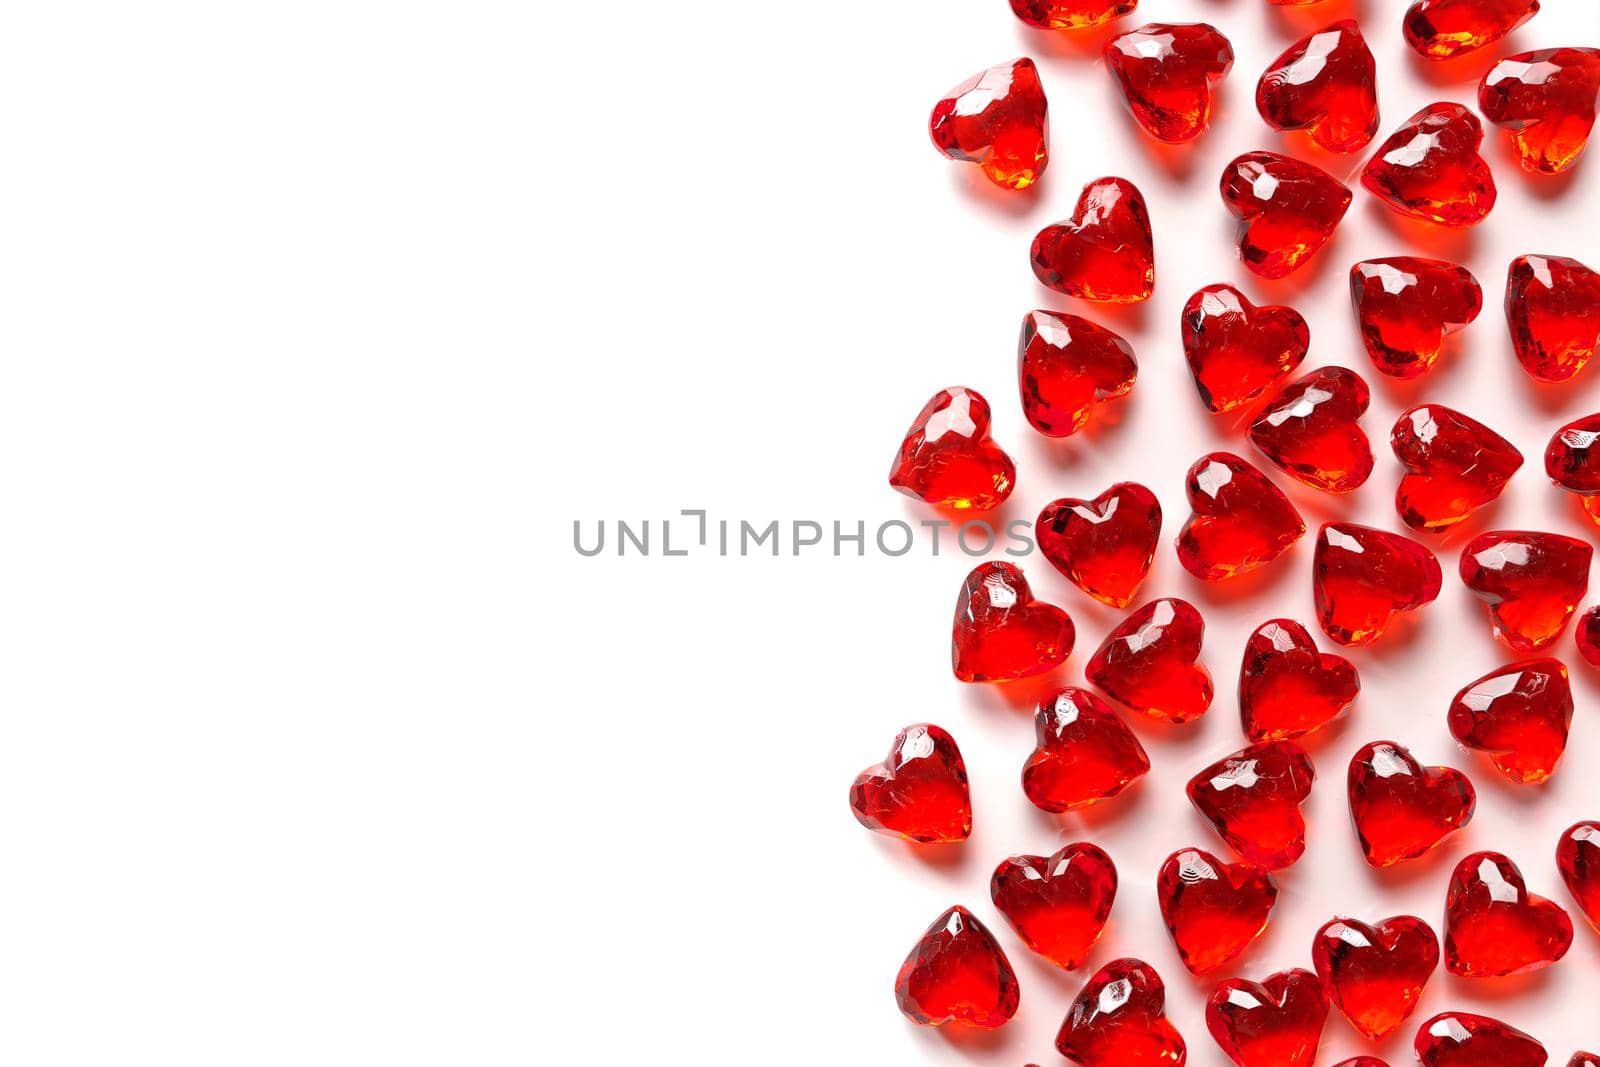 Full Frame Image of Sparkling Red Gemstone Hearts on a White Studio Background by markvandam